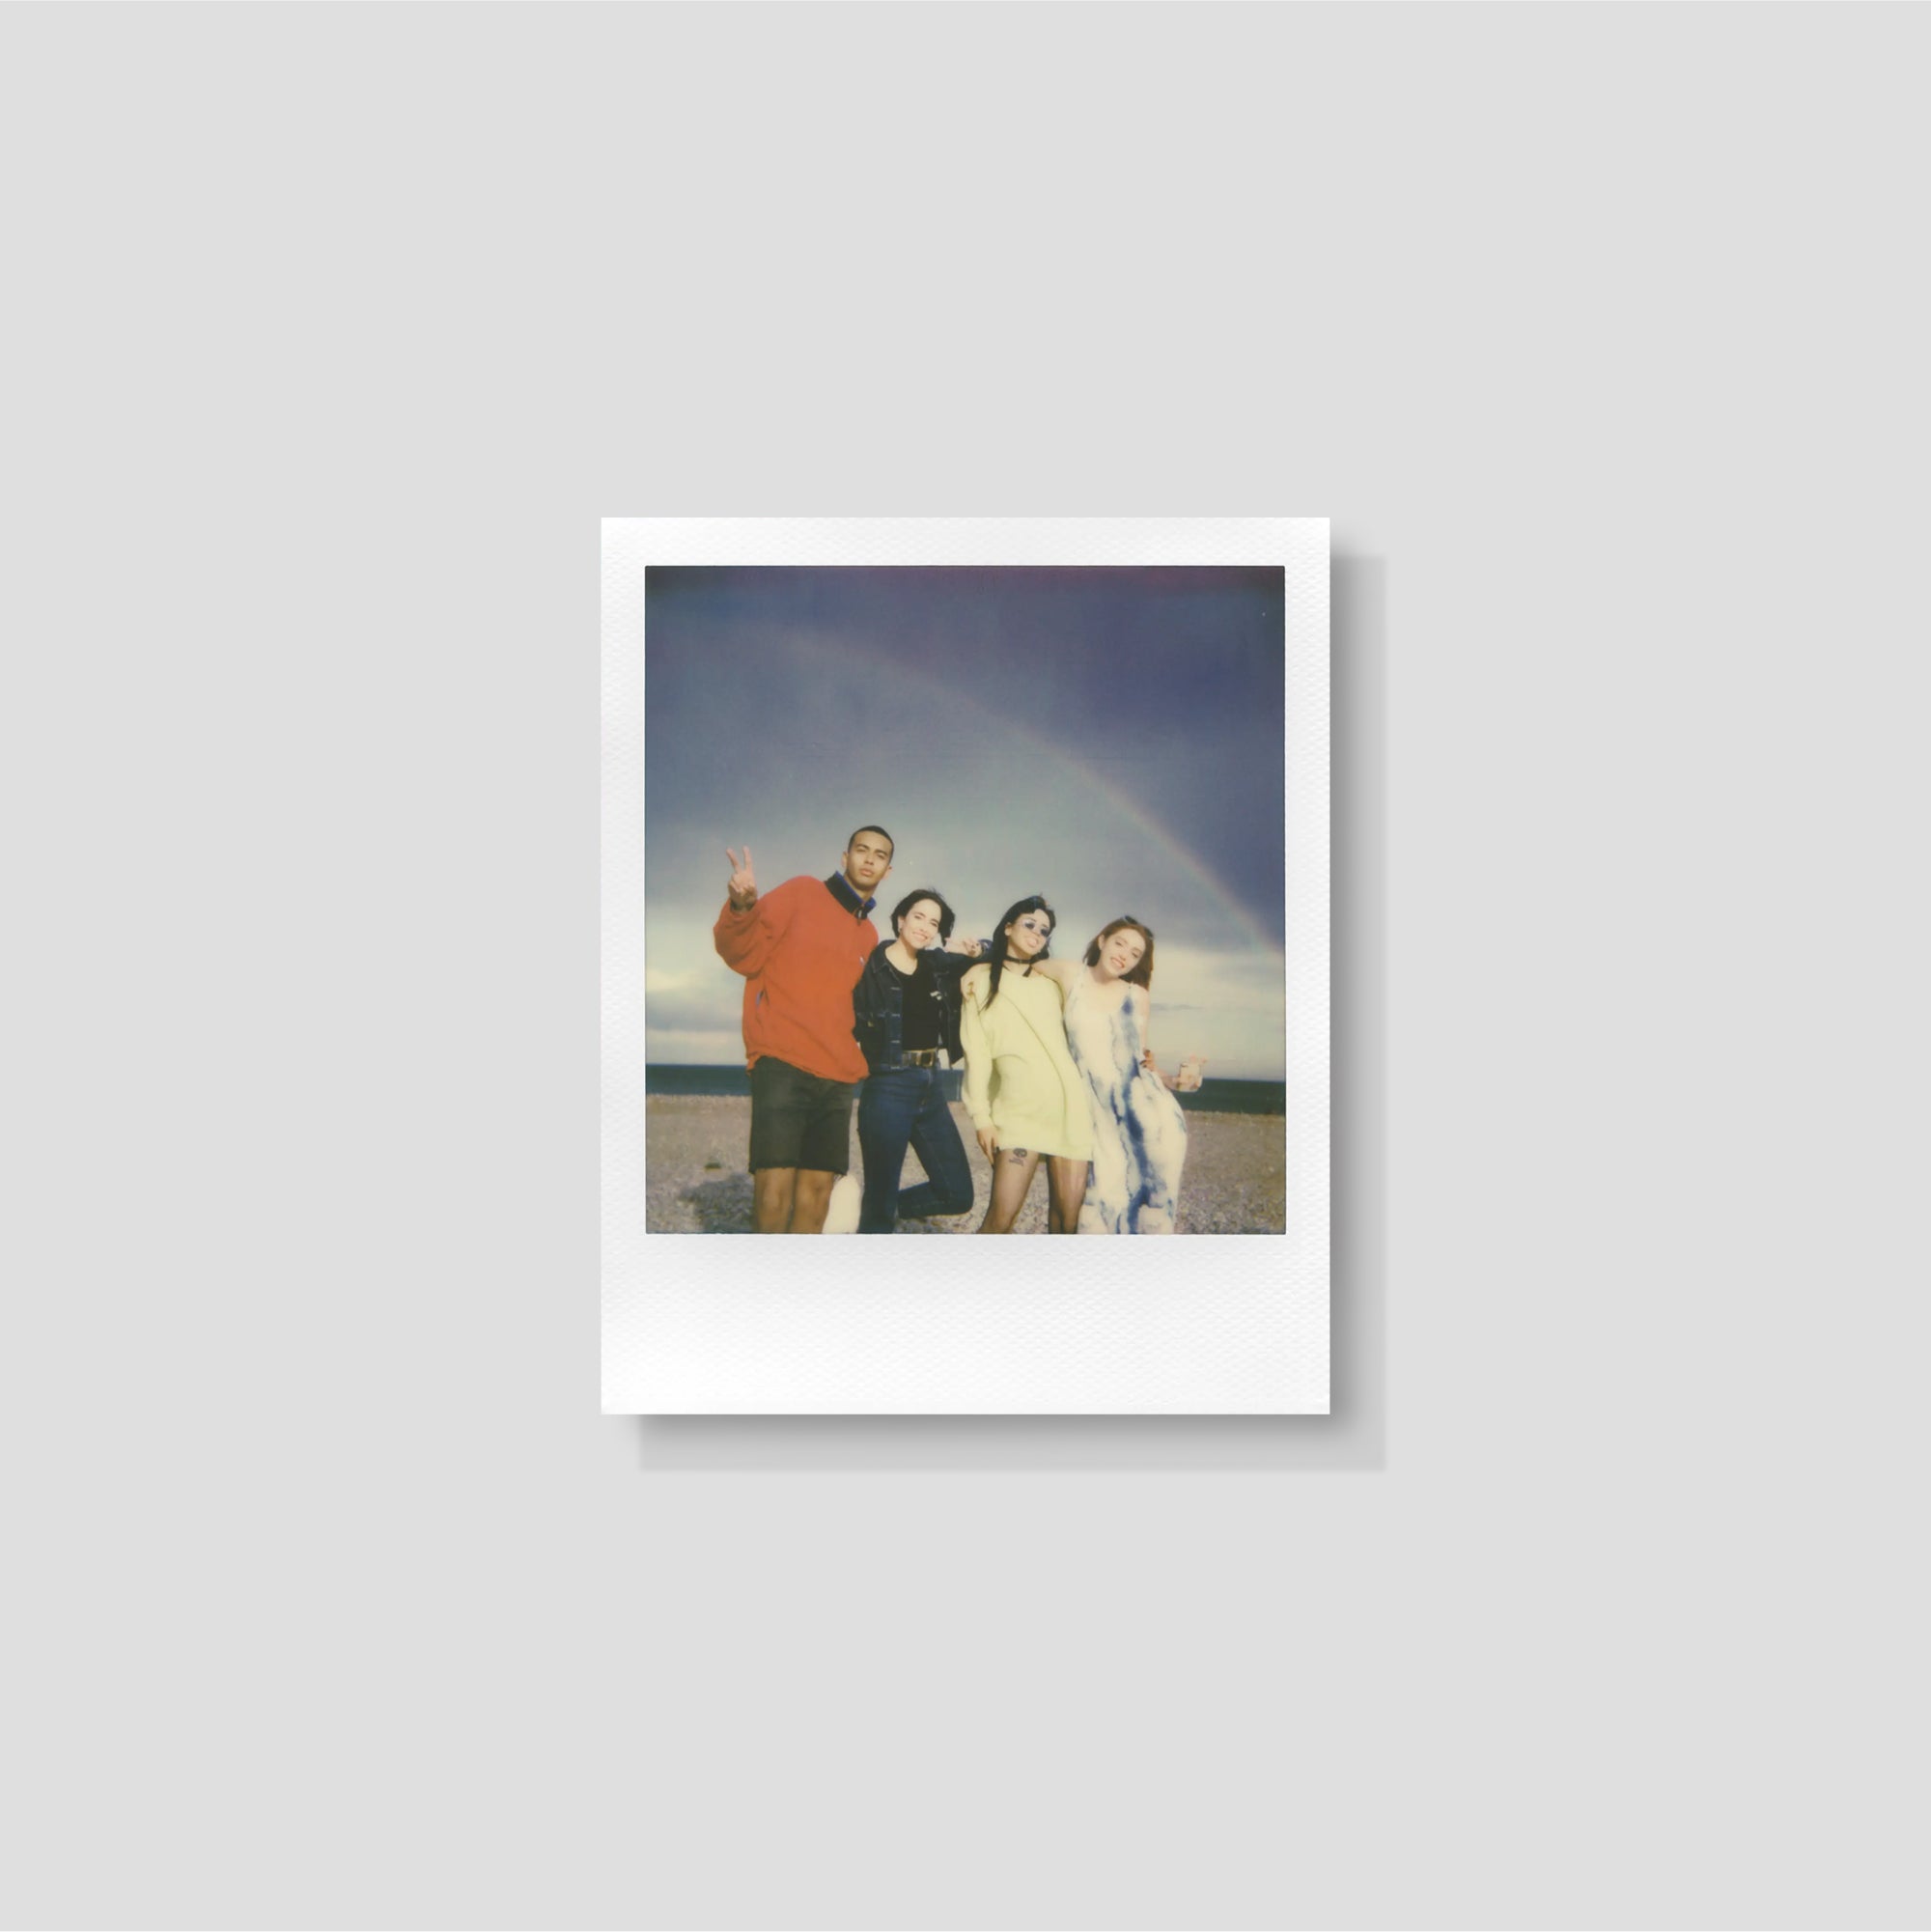 Polaroid 600 Film - Colour - Analogue Wonderland